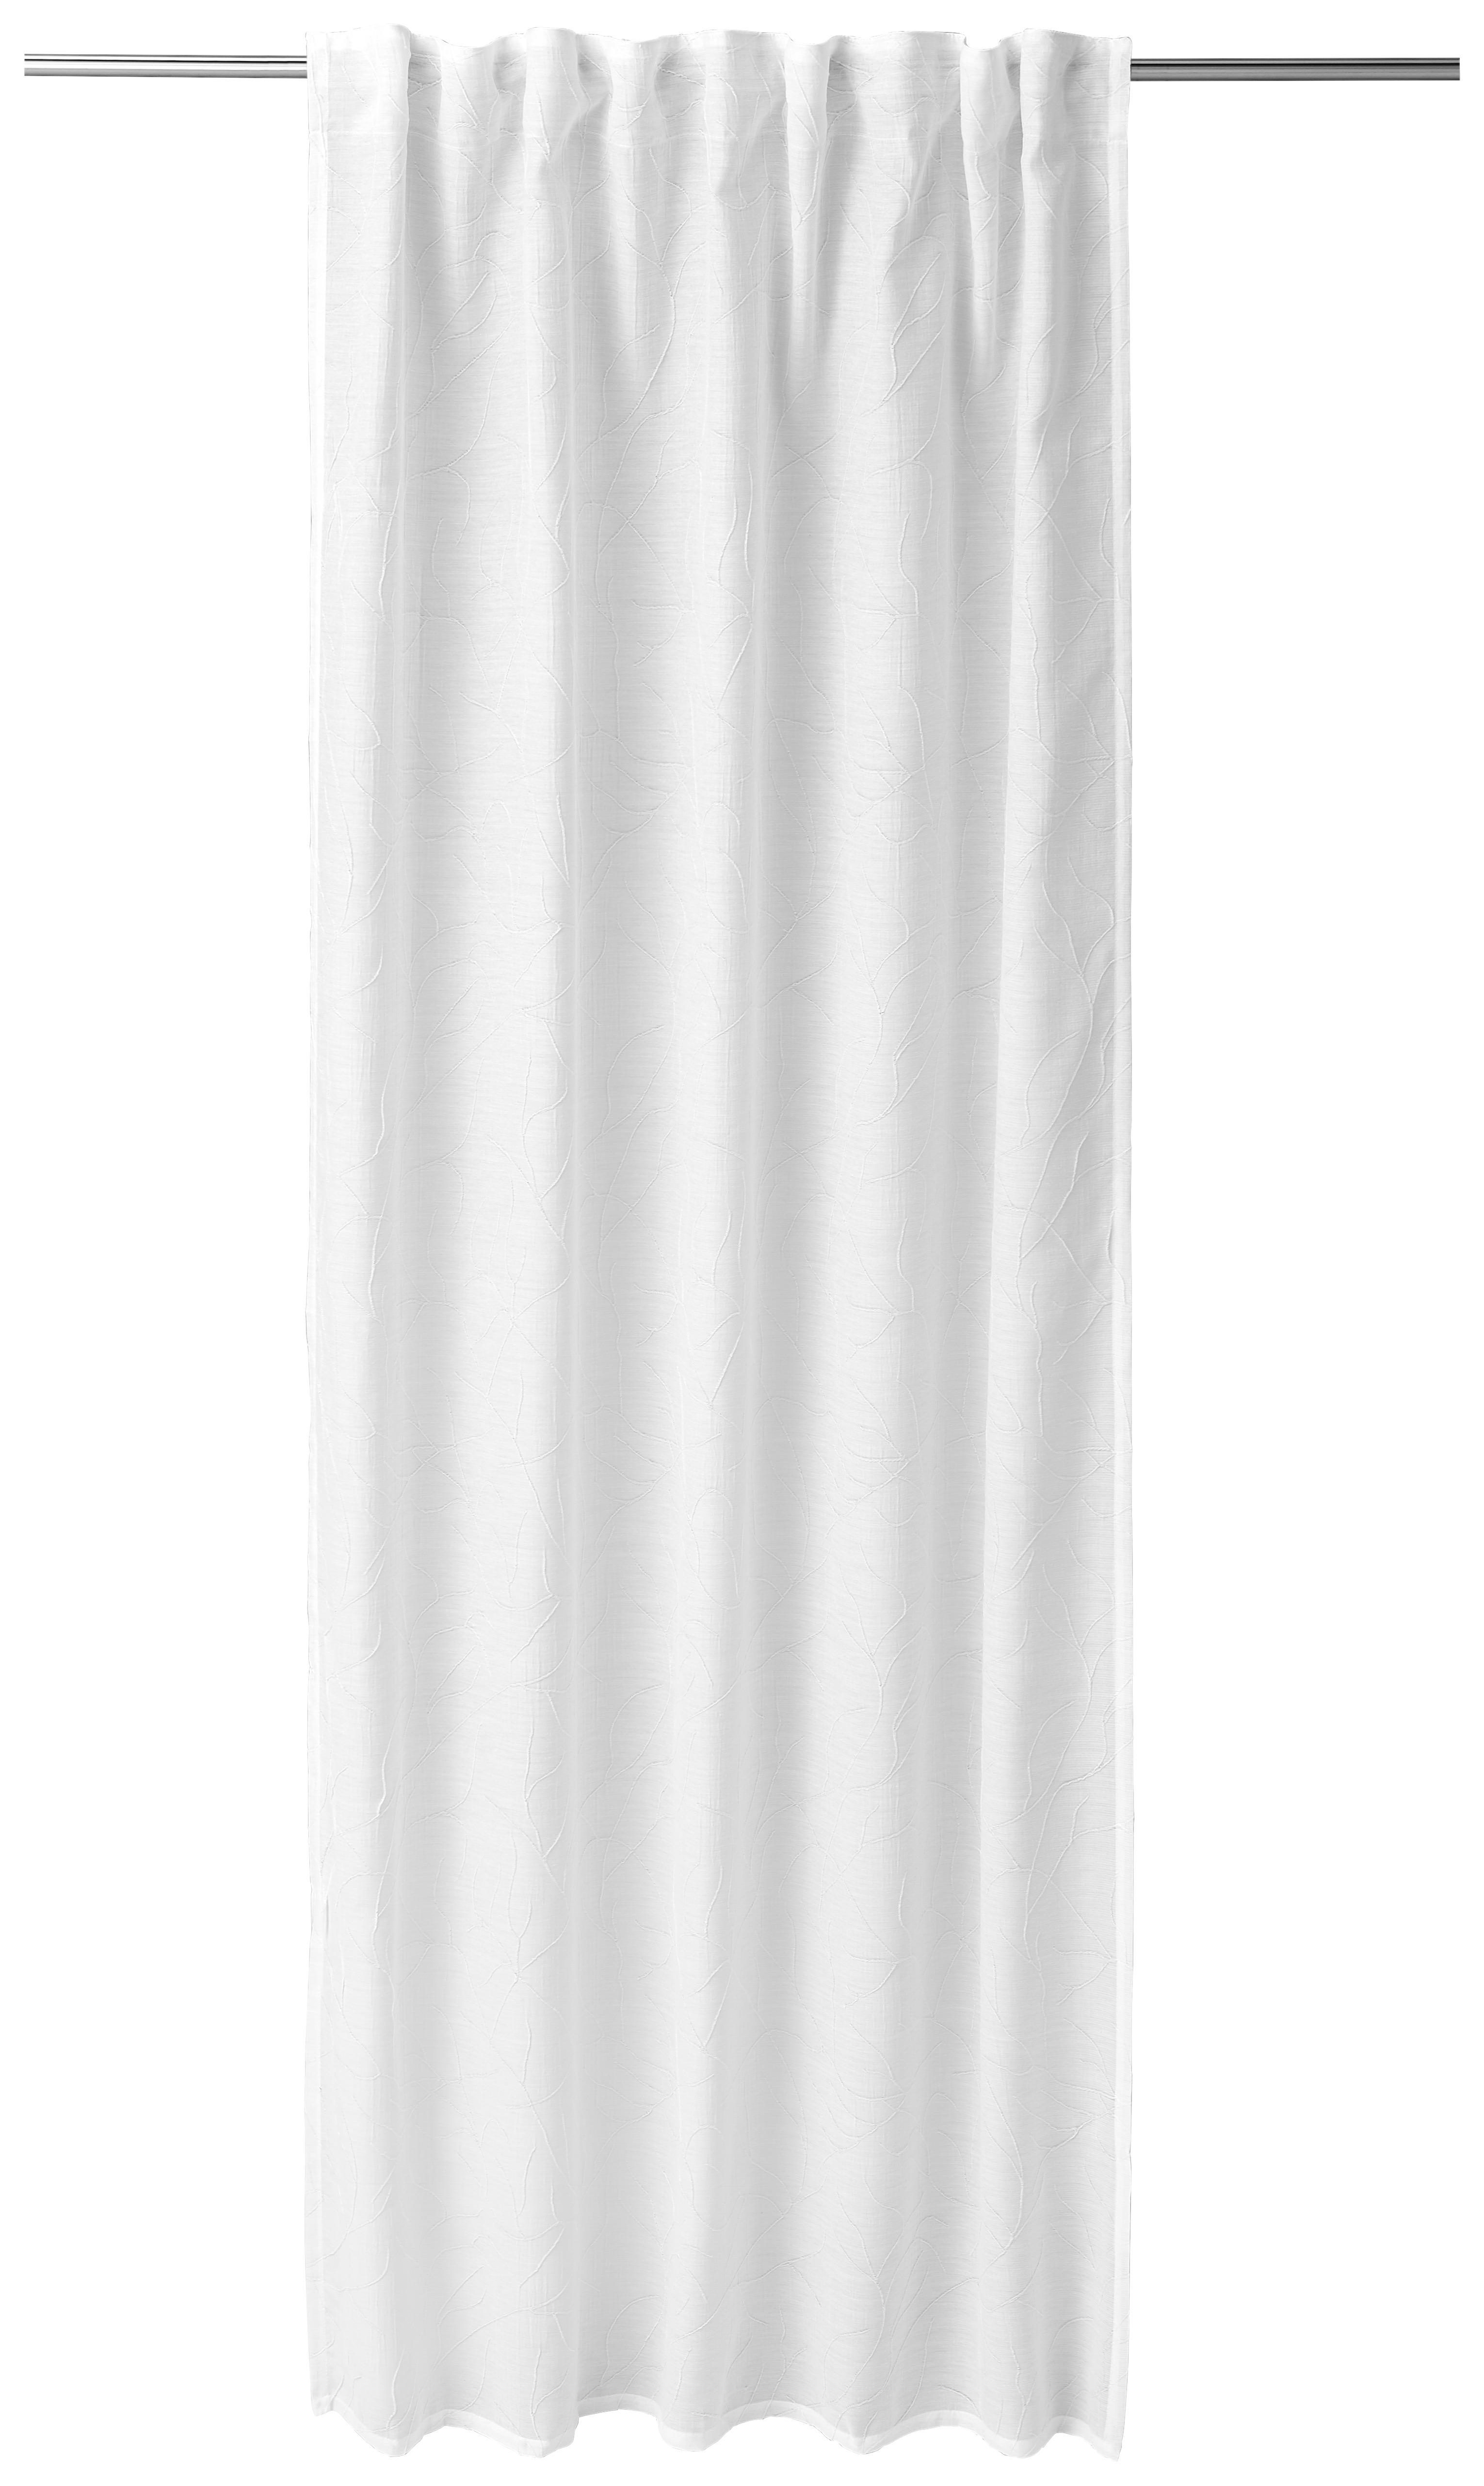 FERTIGVORHANG TAINATE halbtransparent 140/245 cm   - Weiß, Basics, Textil (140/245cm) - Esposa